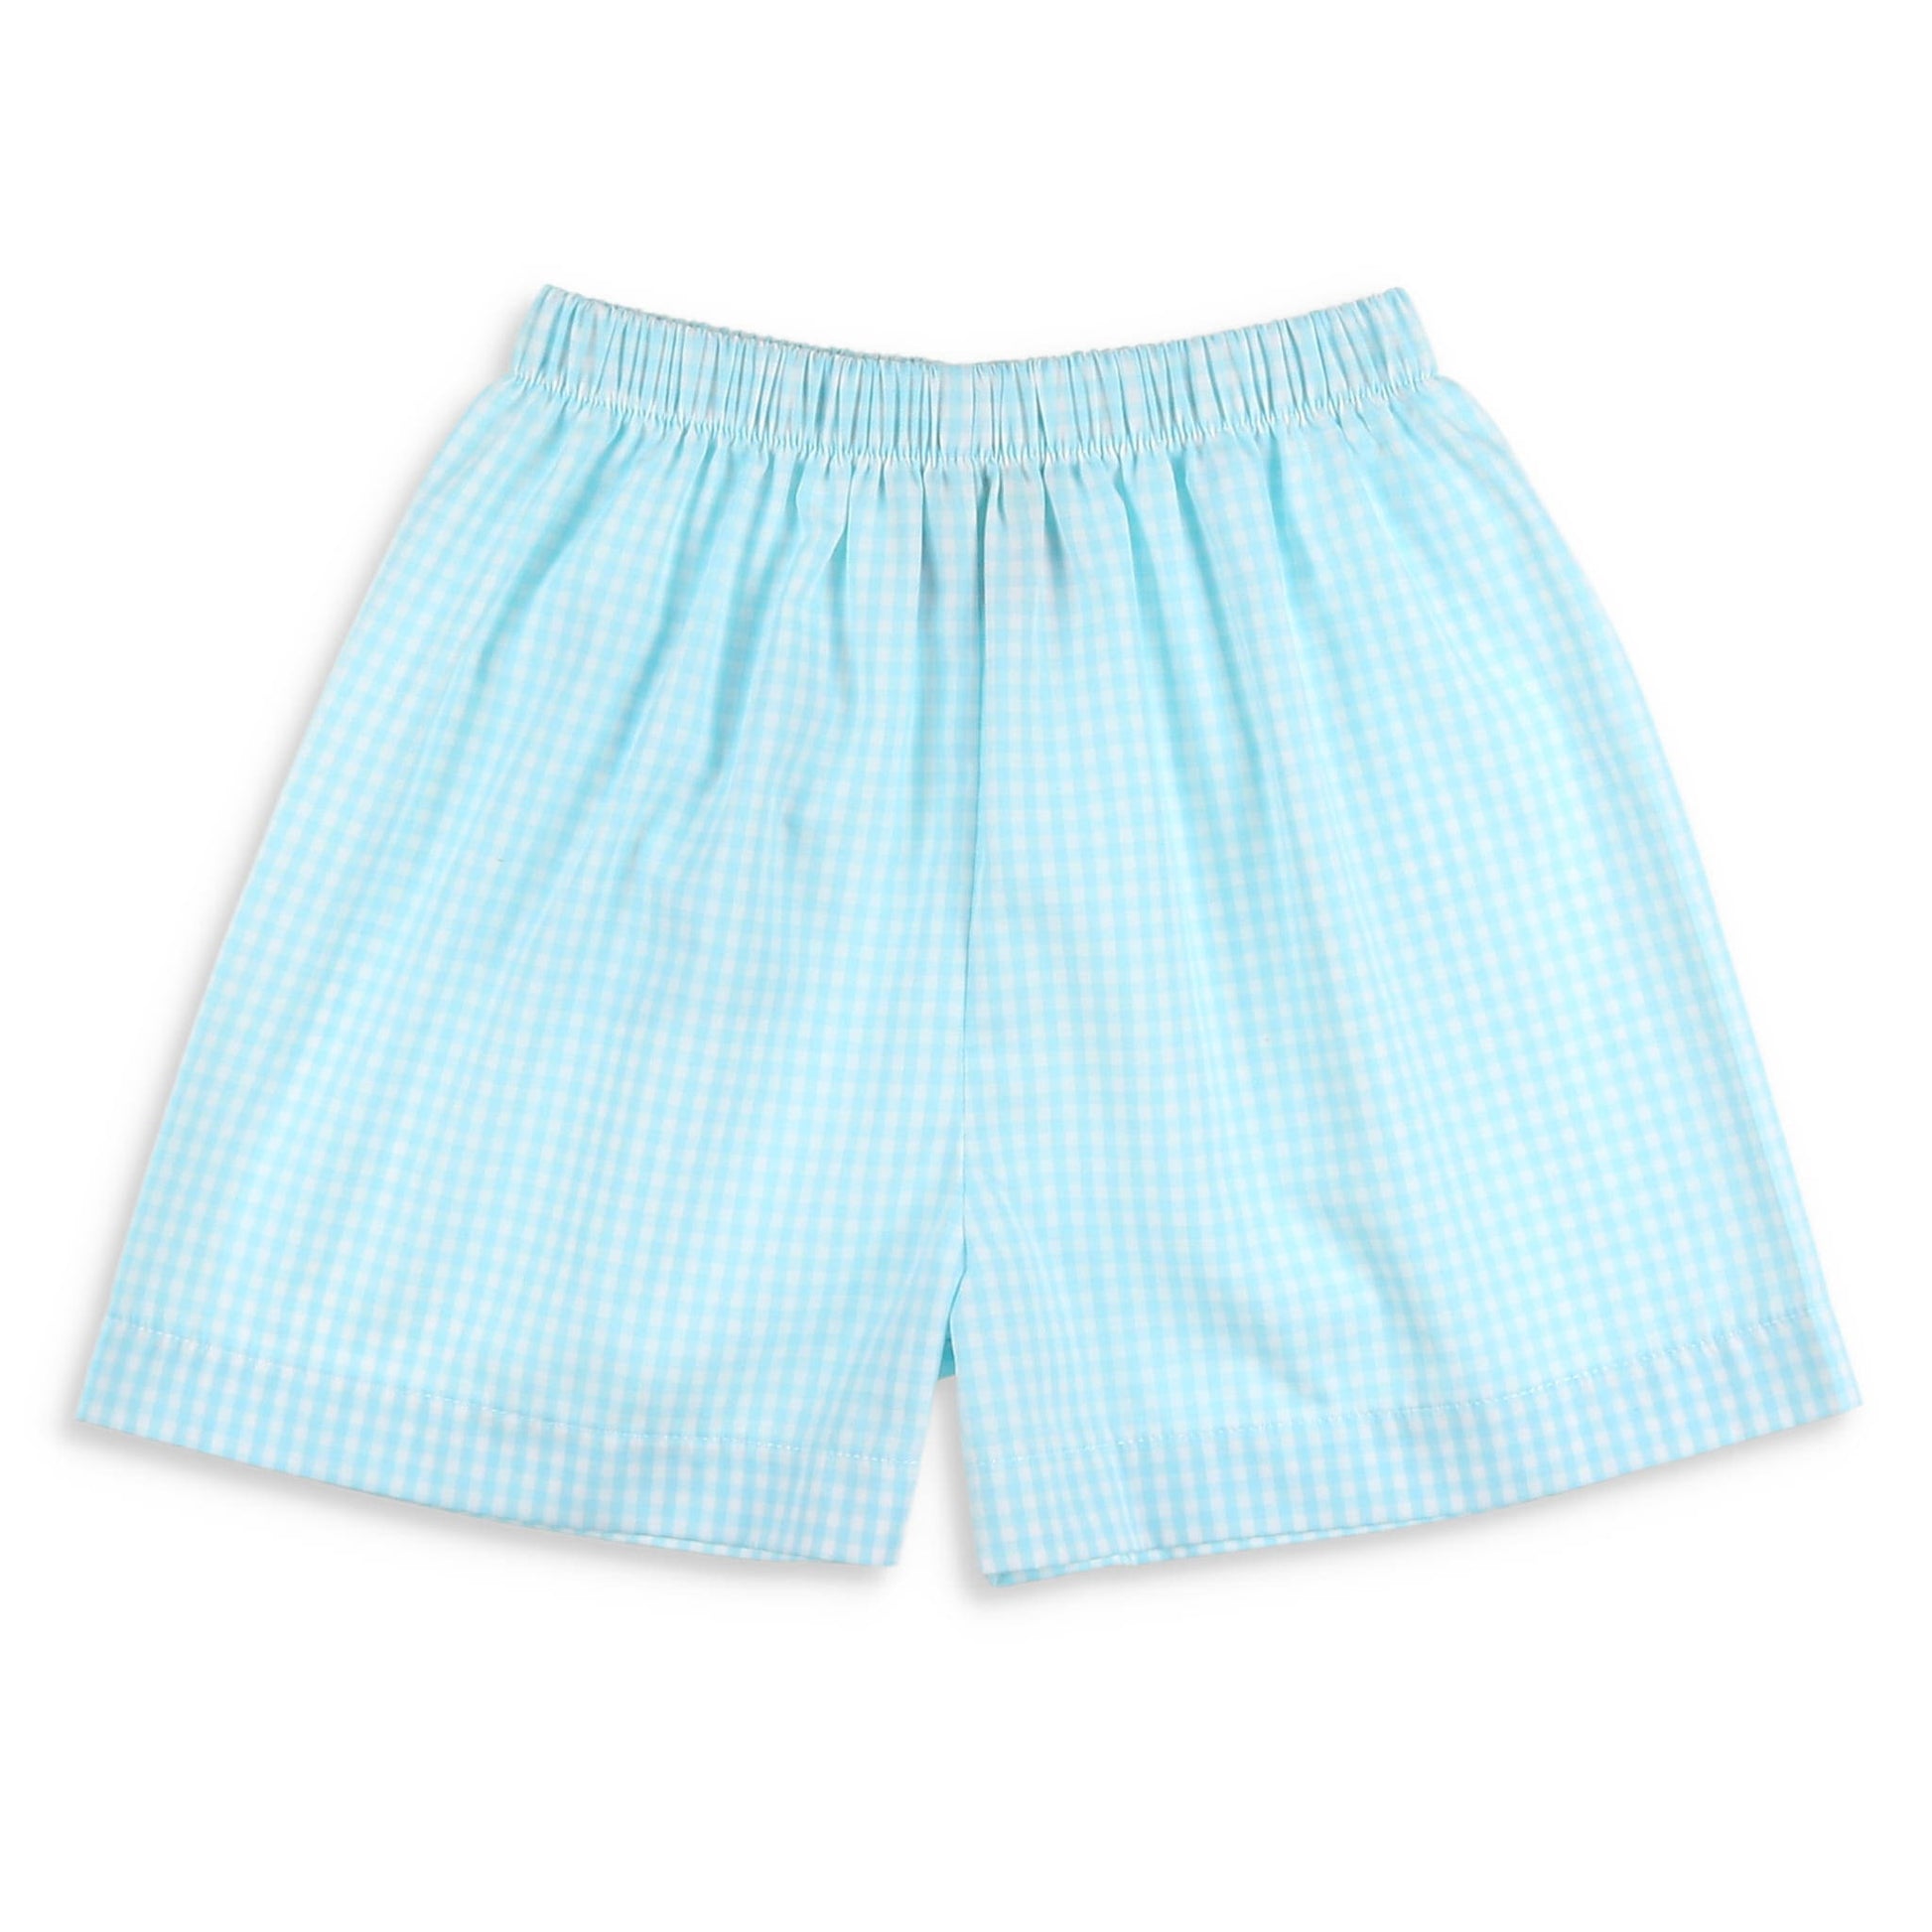 Boys Aqua Check Rhett Shorts - Shrimp and Grits Kids